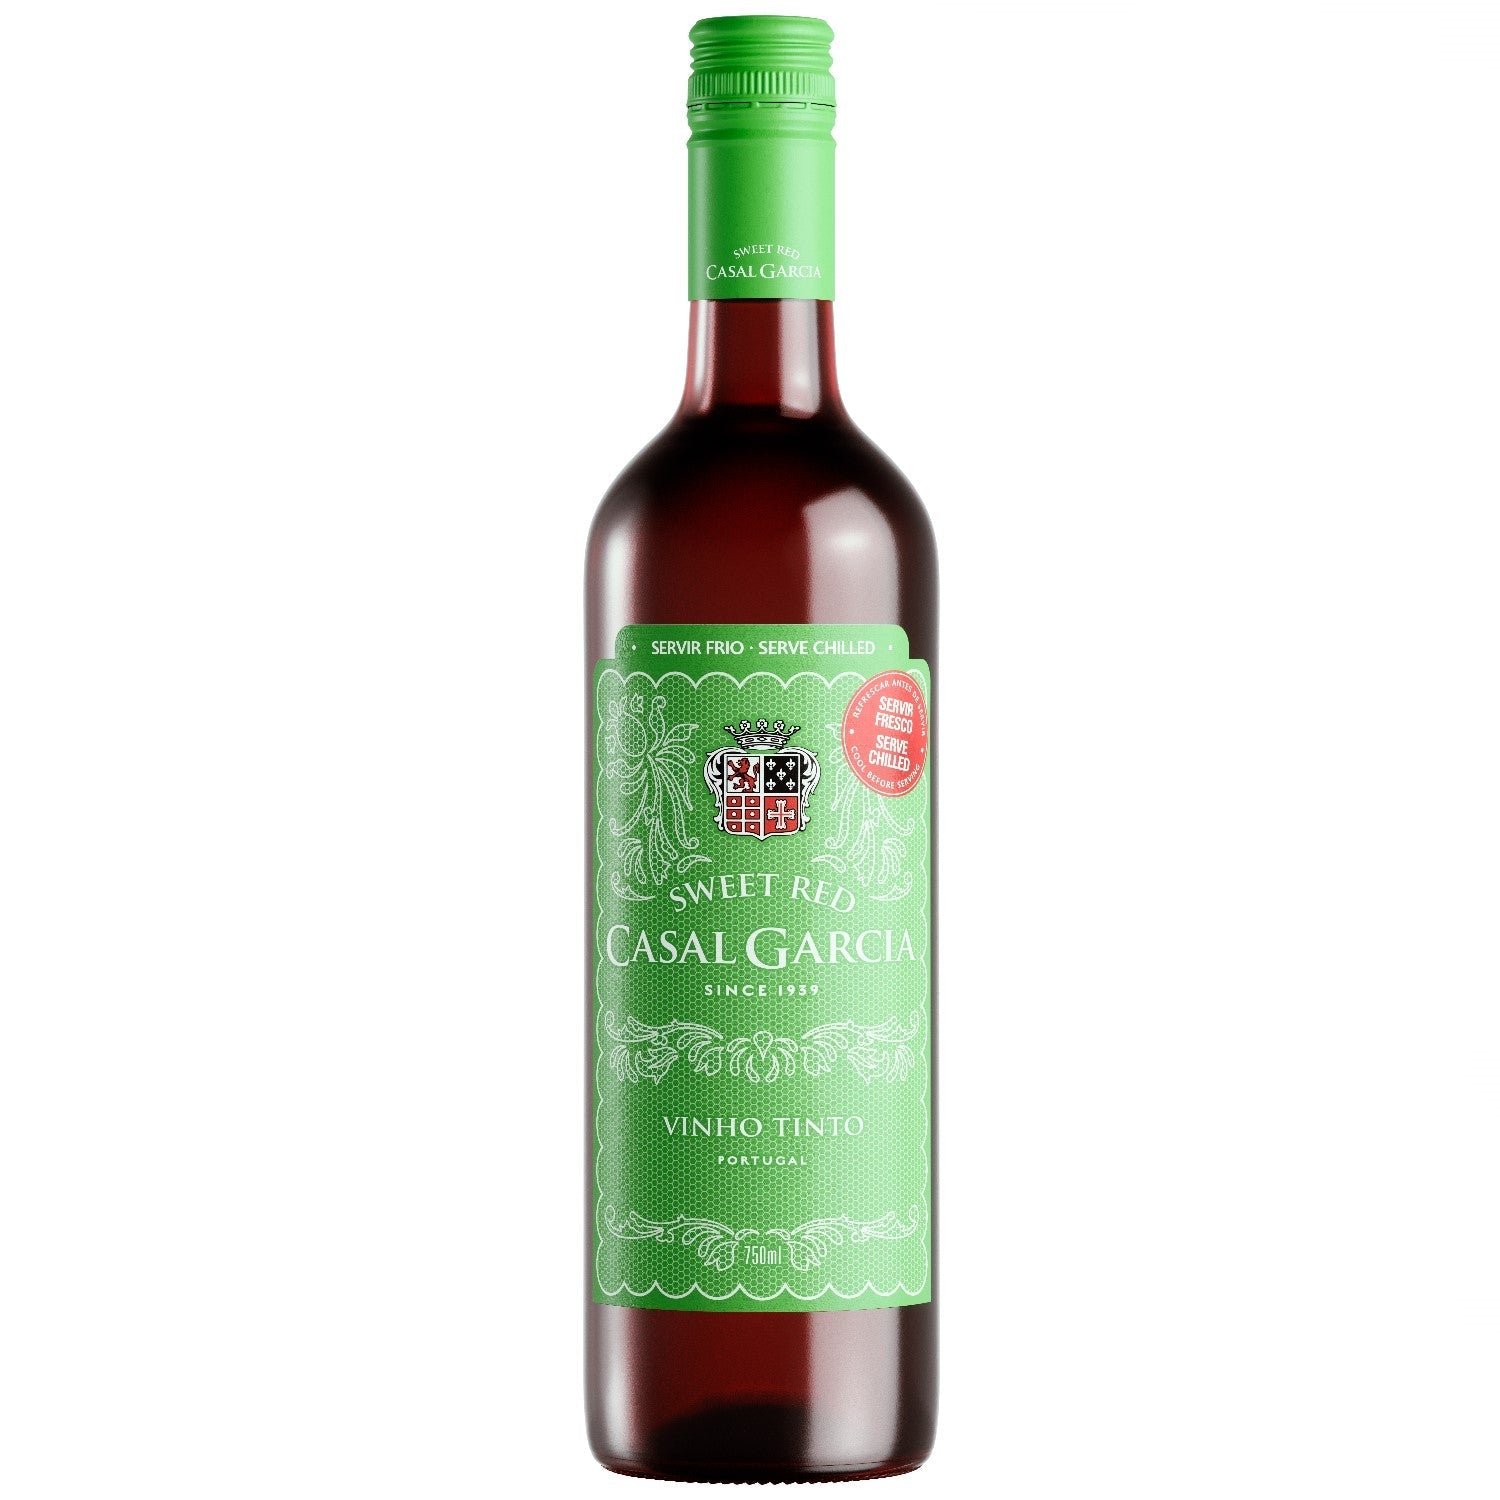 Casal Garcia Sweet Red Rotwein Wein süß Portugal (6 x 0.75l) - Versanel -